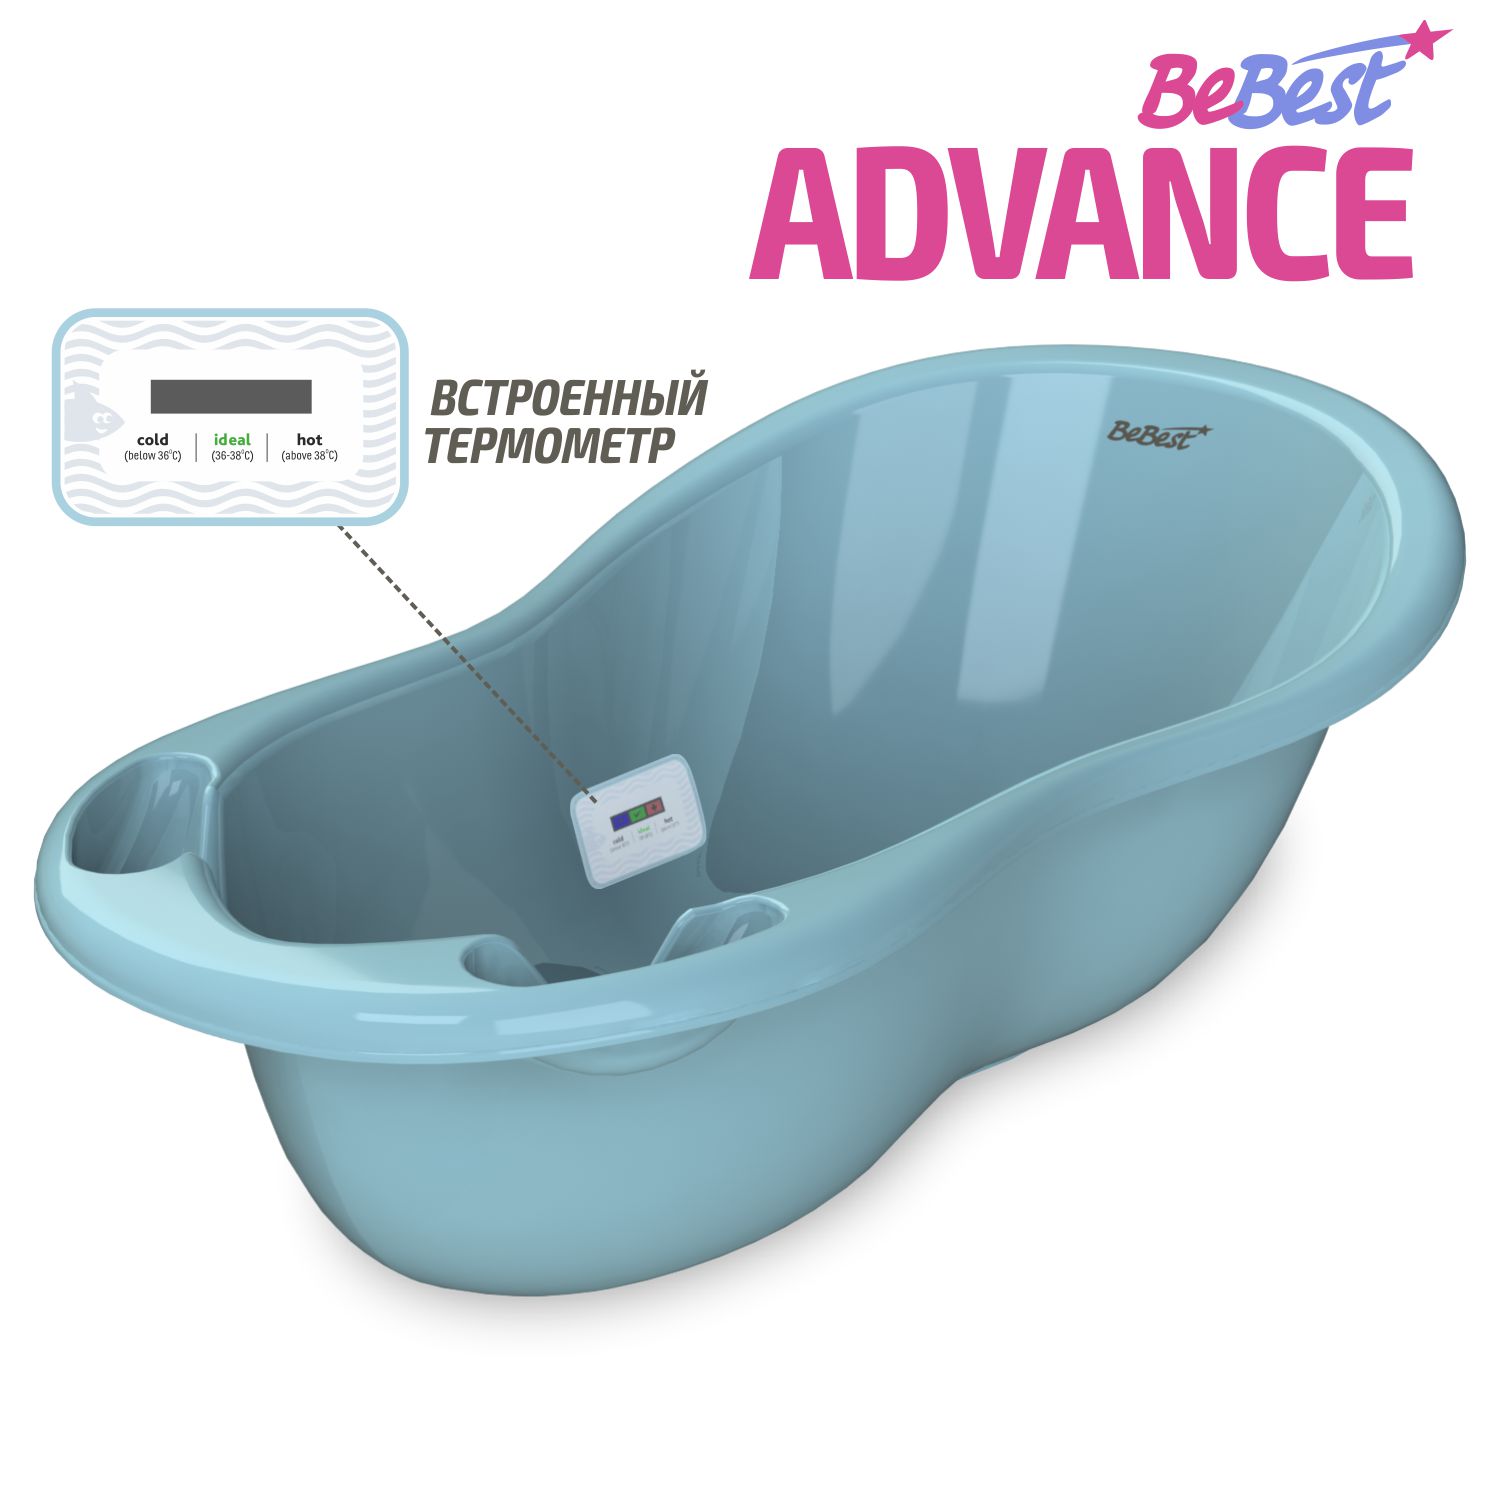 Ванночка для купания BeBest Advance с термометром голубой - фото 1